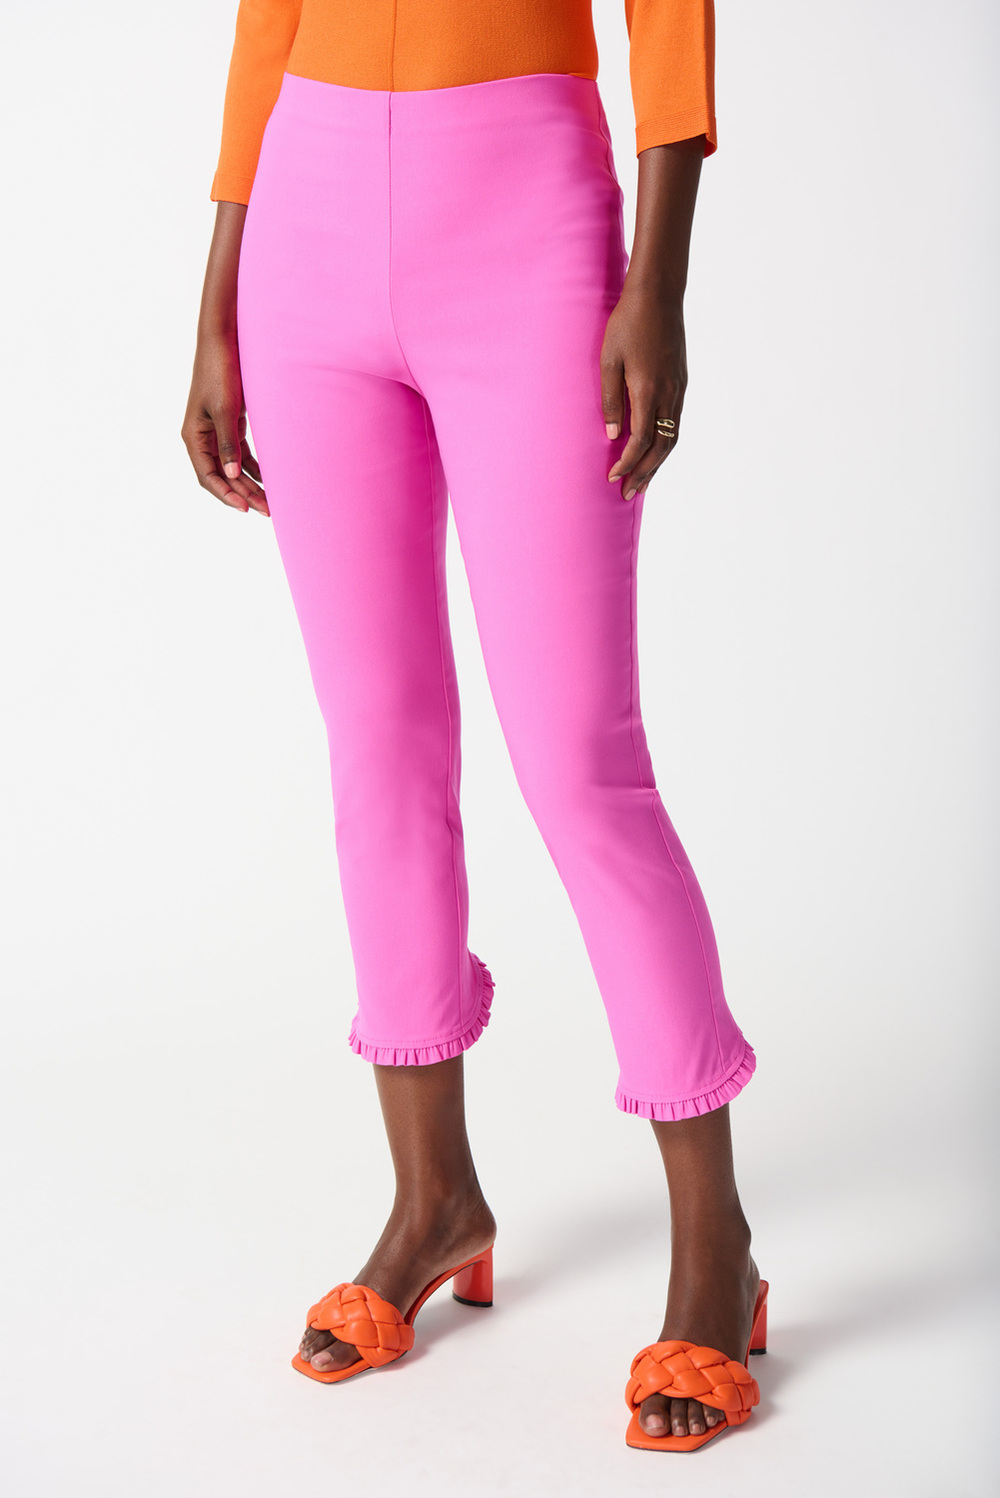 Ruffle Trim Capris Style 242145. Pink